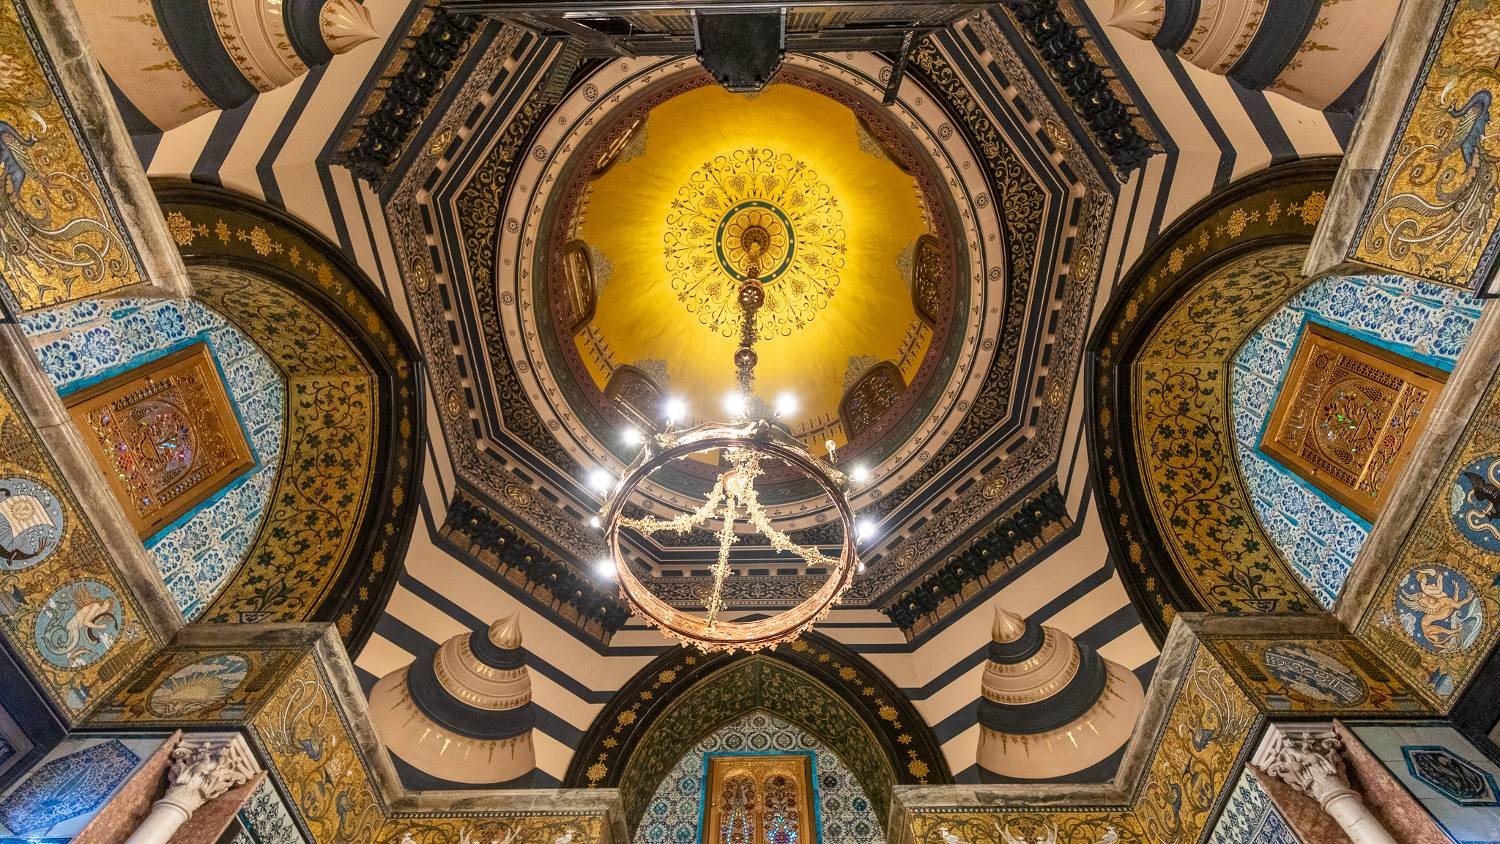 The gold mosaic frieze designed by English artist Walter Crane imitates mosaic artwork found in the Umayyad Mosque of Damascus (Zirrar Ali)